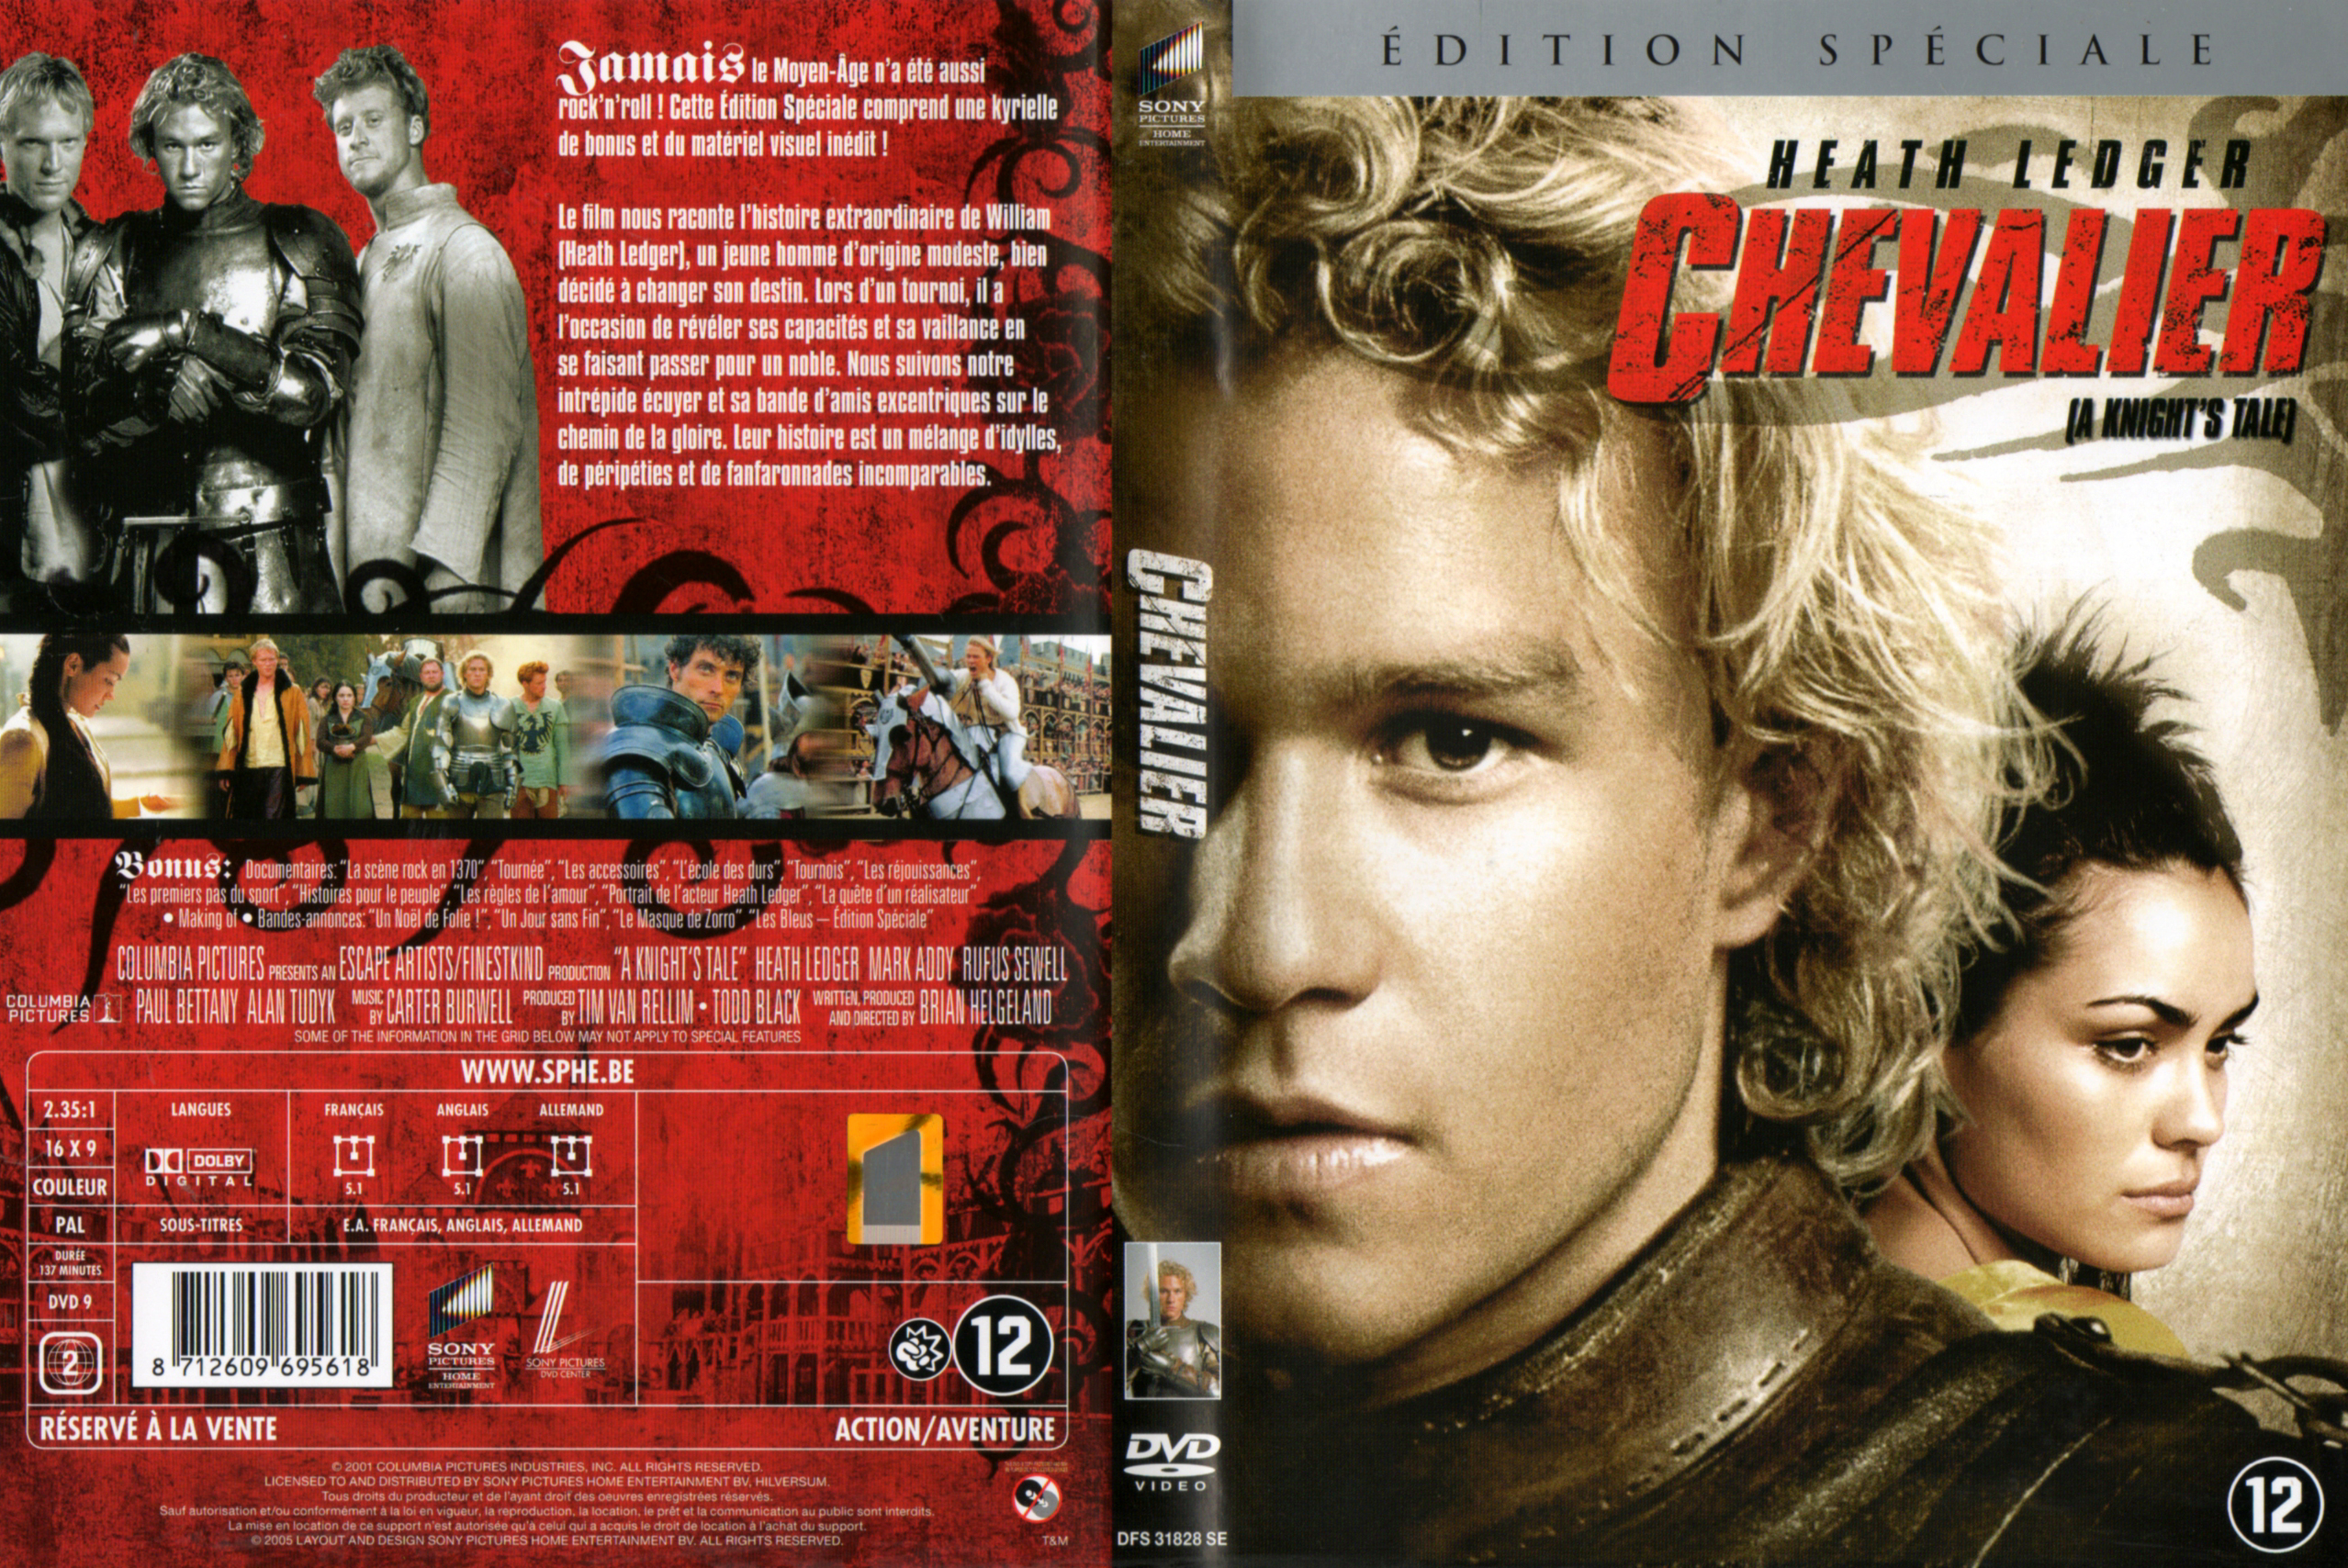 Jaquette DVD Chevalier v3